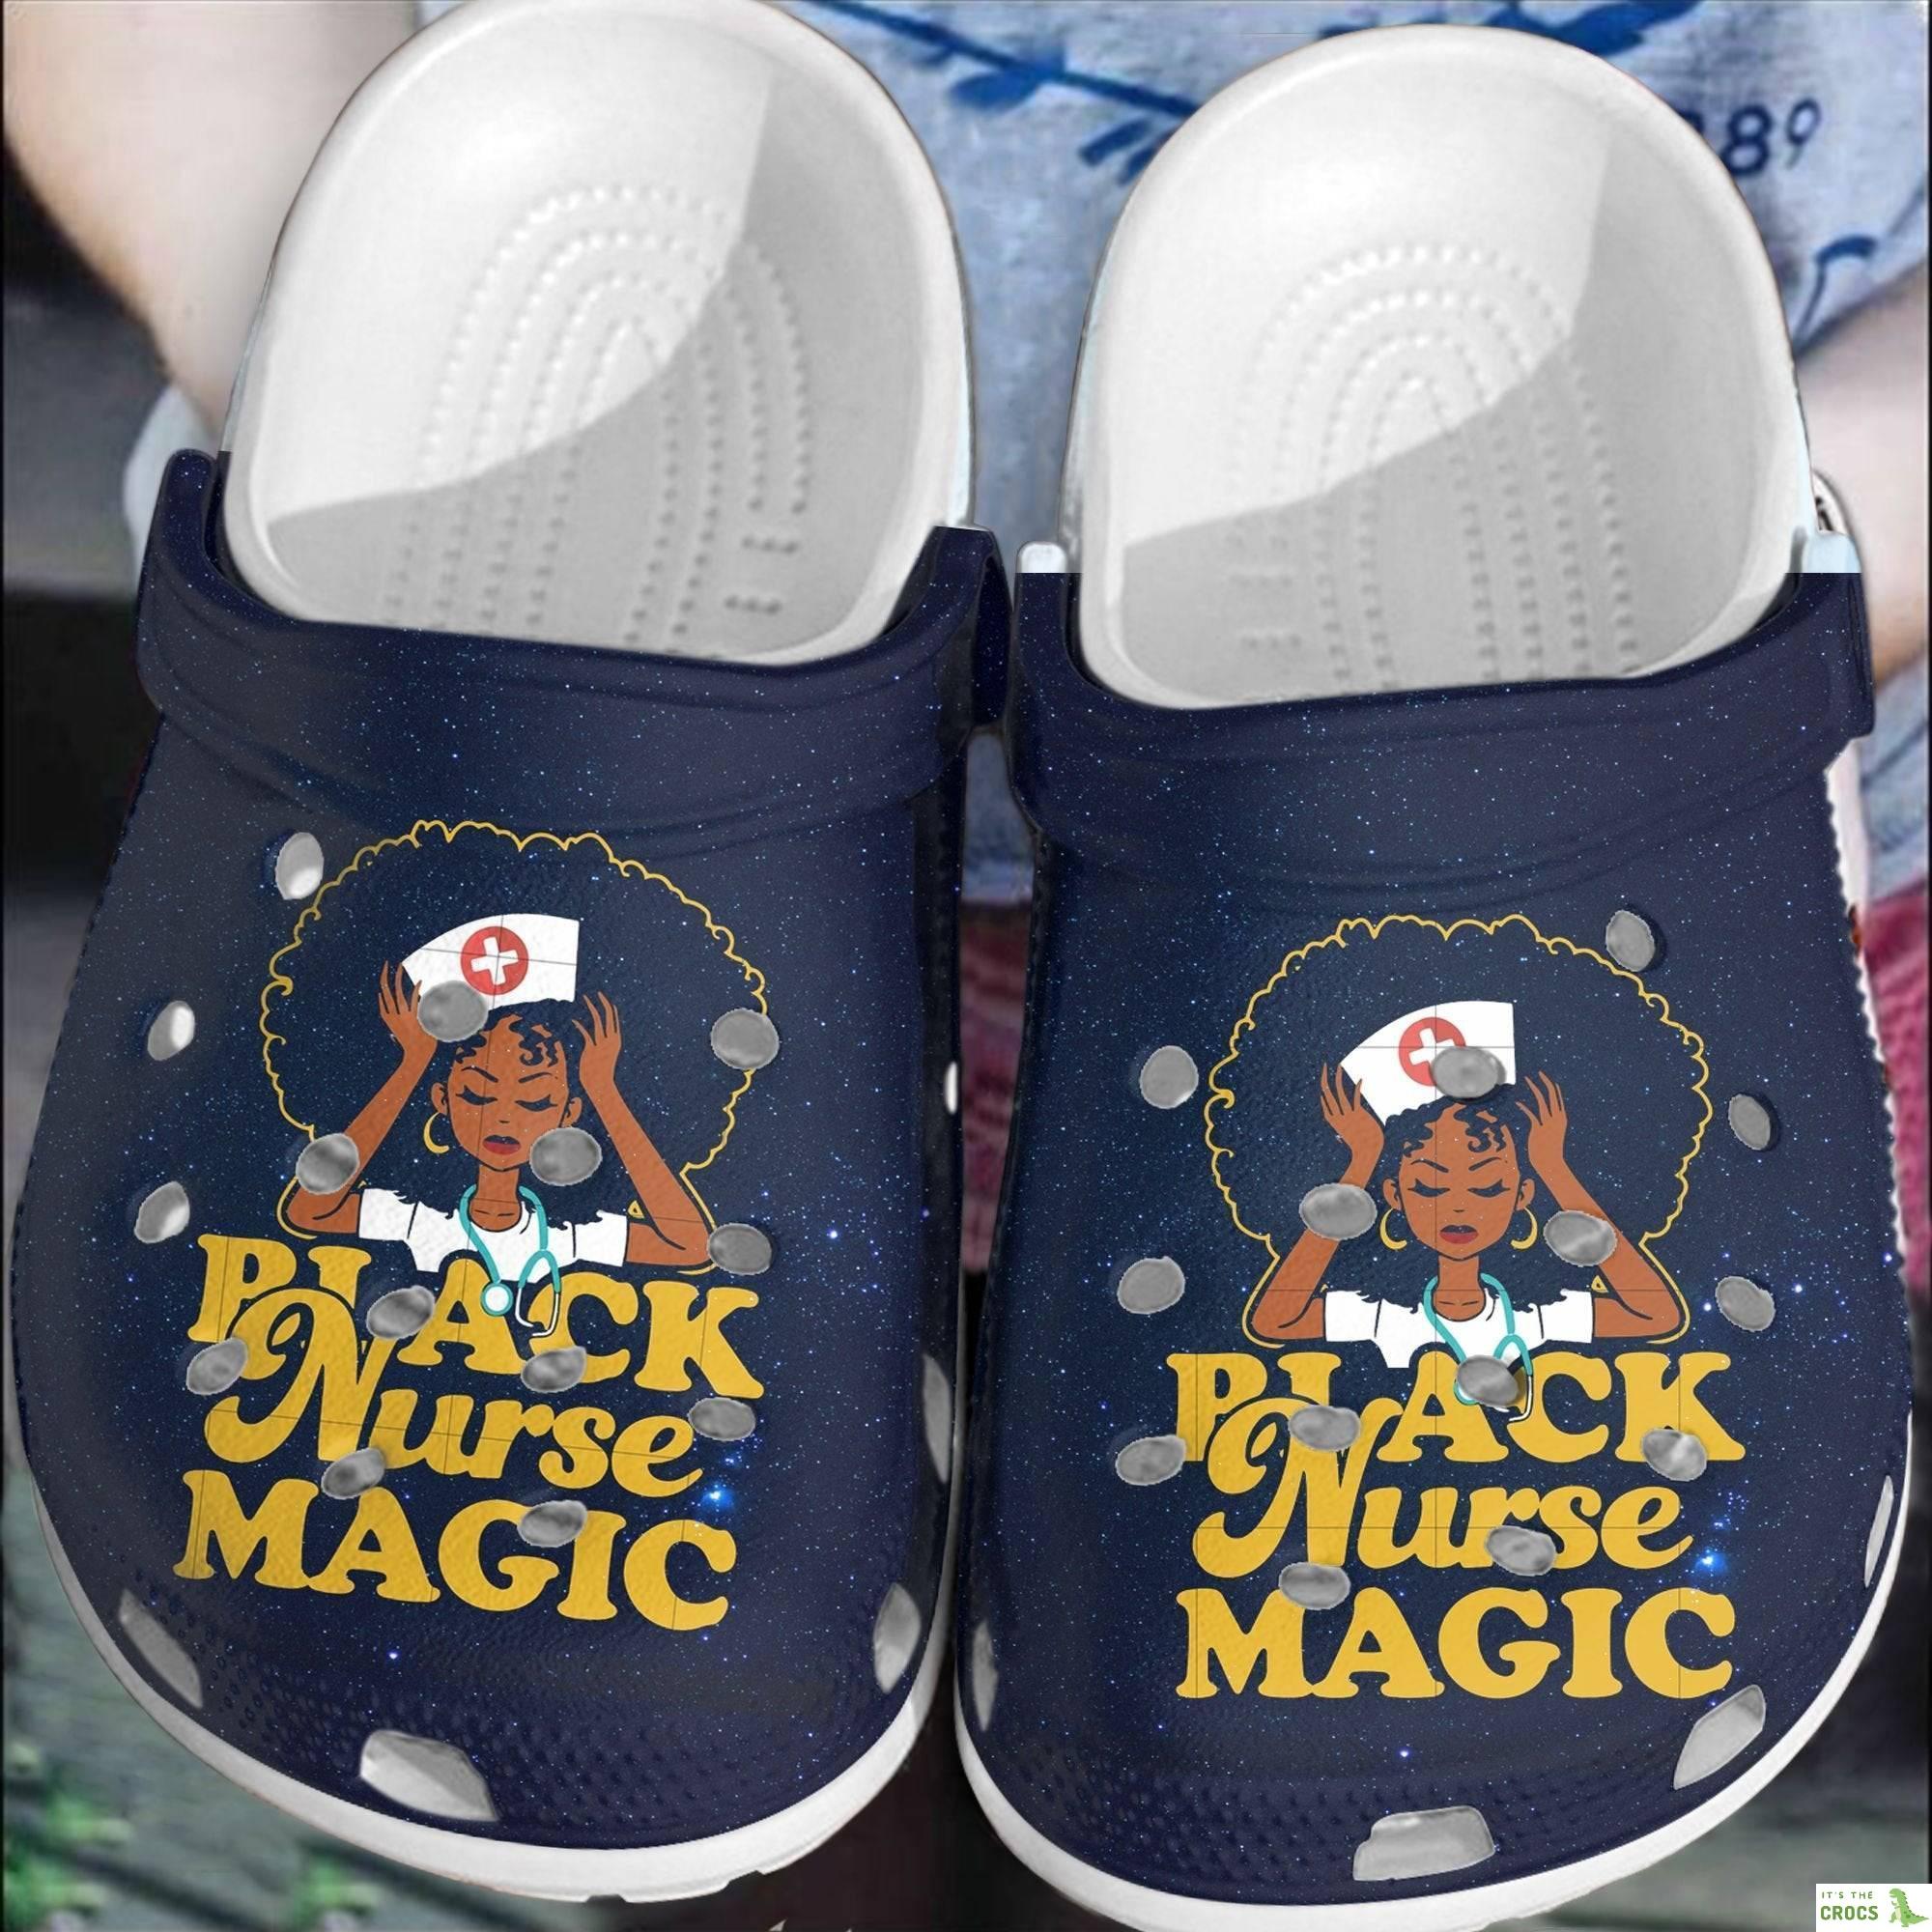 Black Nurse Magic Custom Crocs Clog Shoes – Little Nurse Outdoor Shoe Birthday Gift For Women Girl